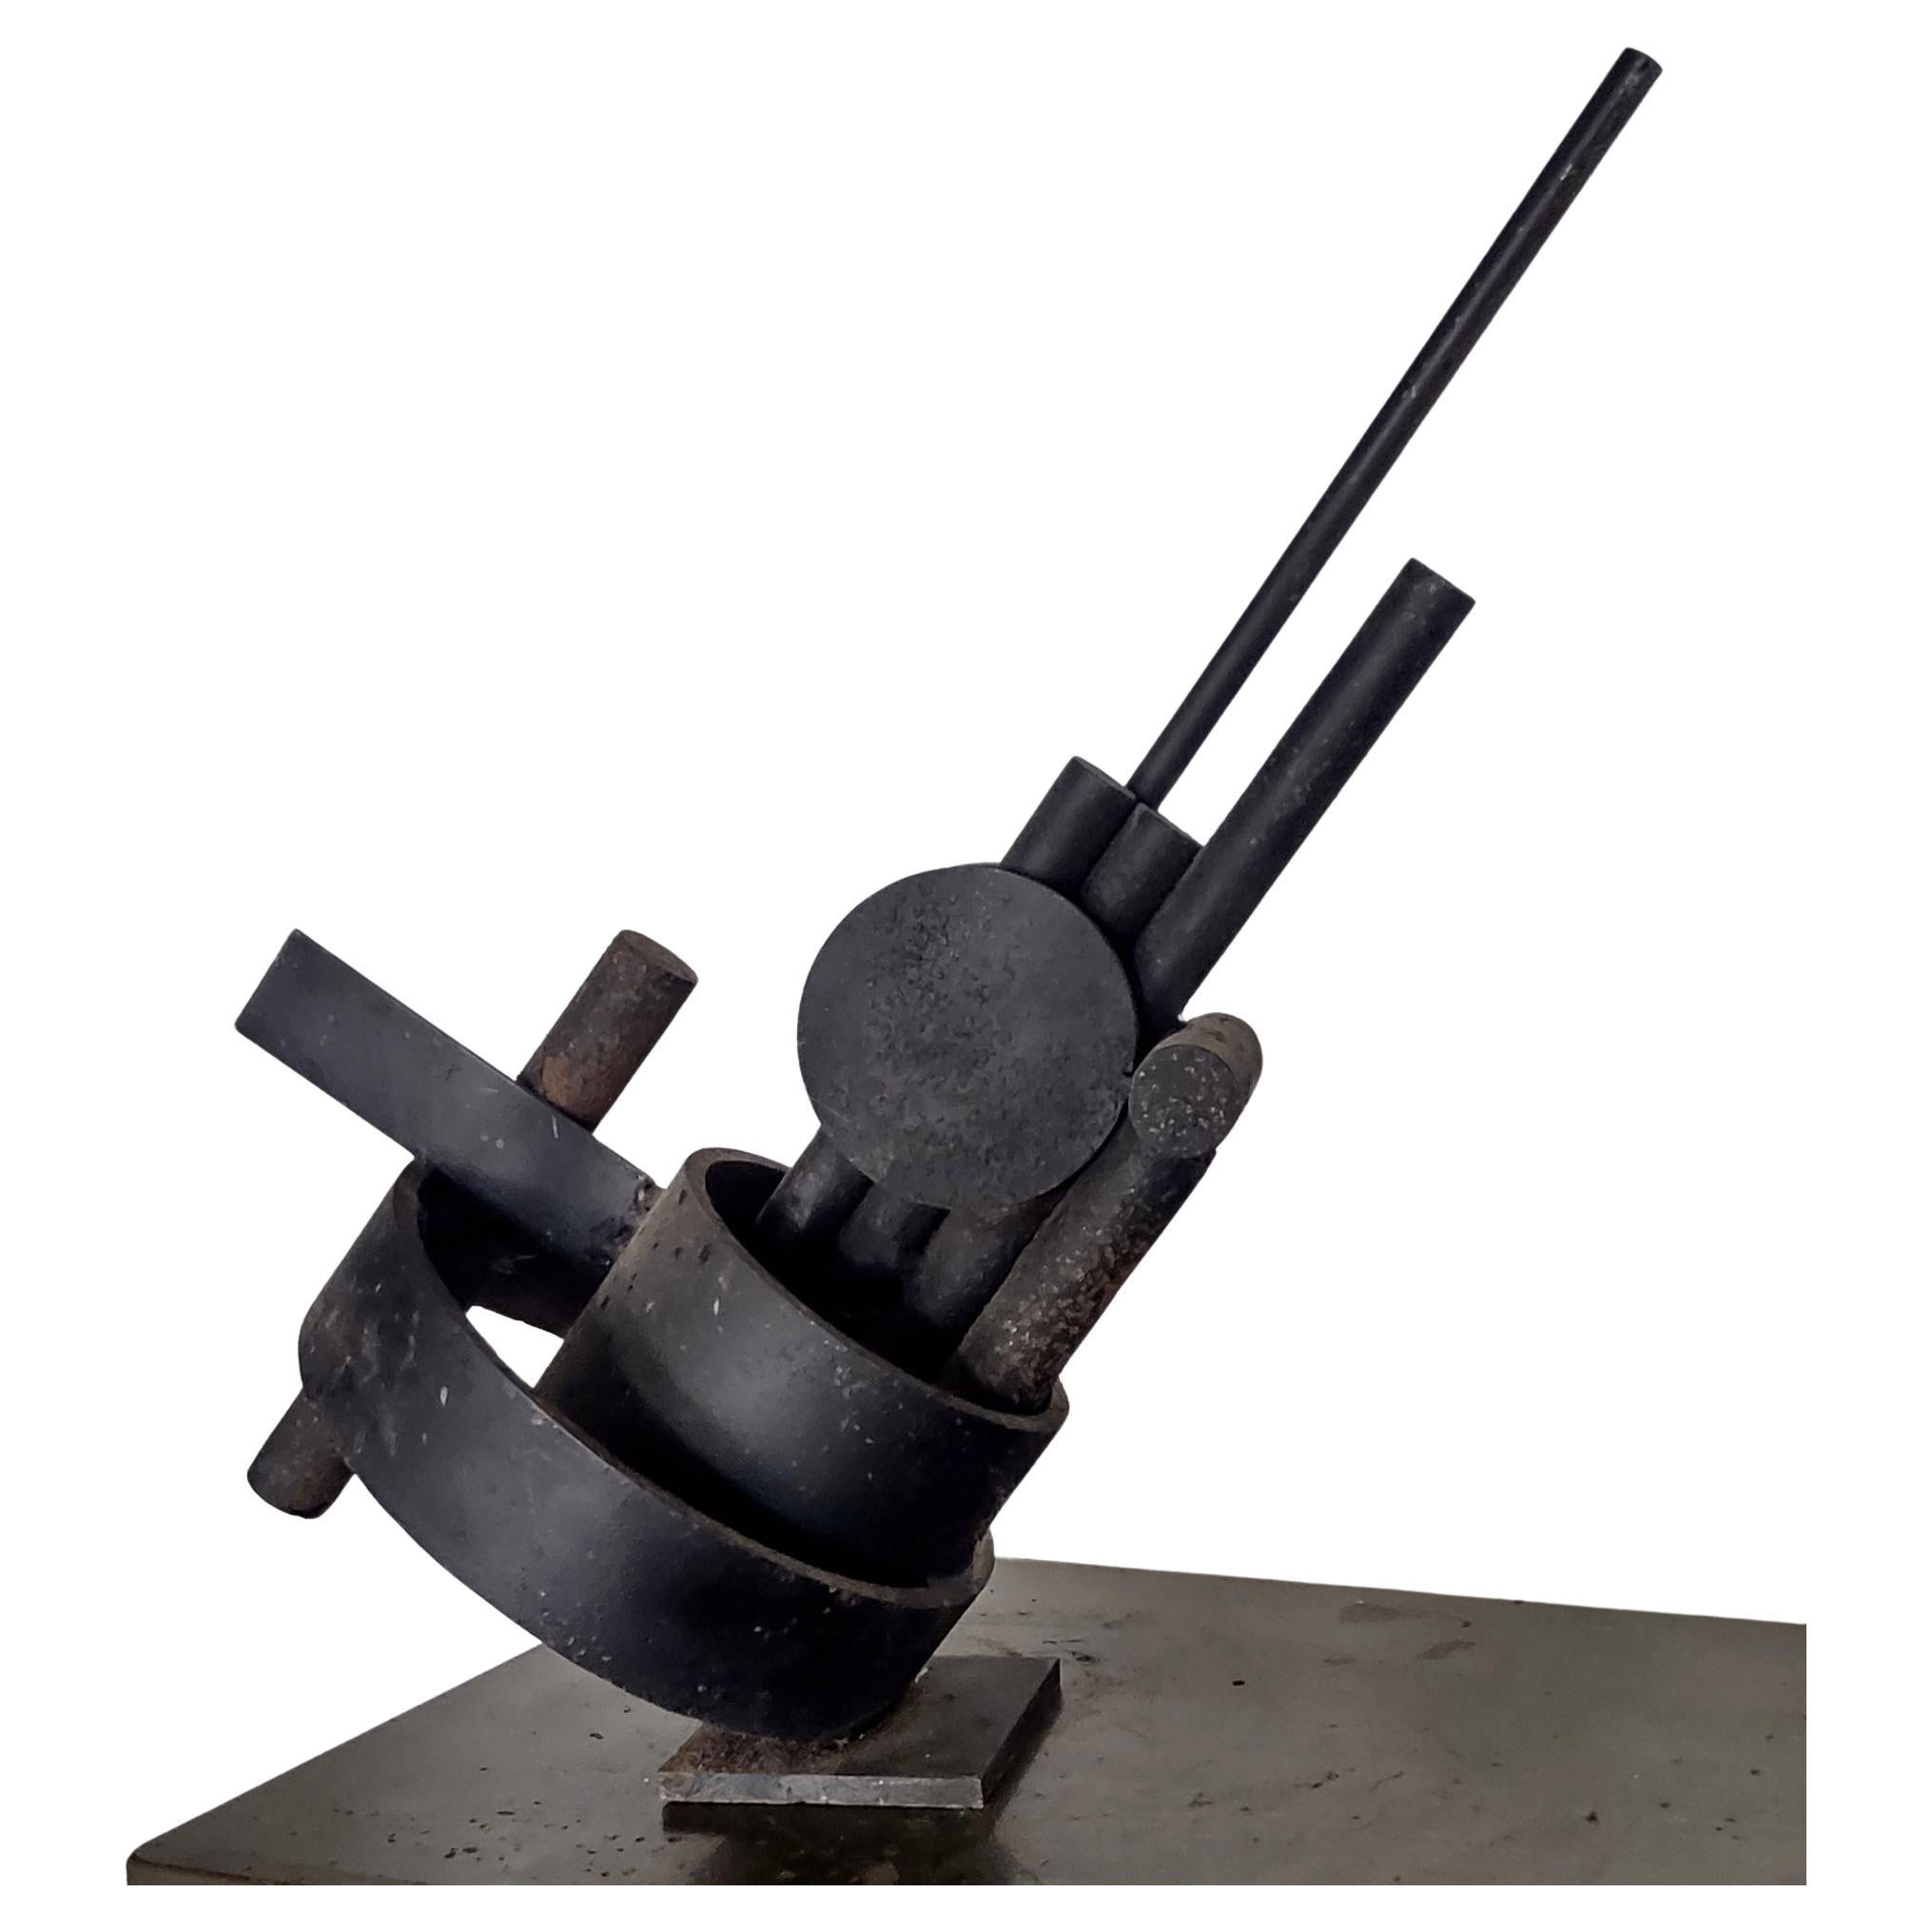 Modernist Enameled Steel Architectural Sculpture  "Senalizar" Patrick O'Brien  For Sale